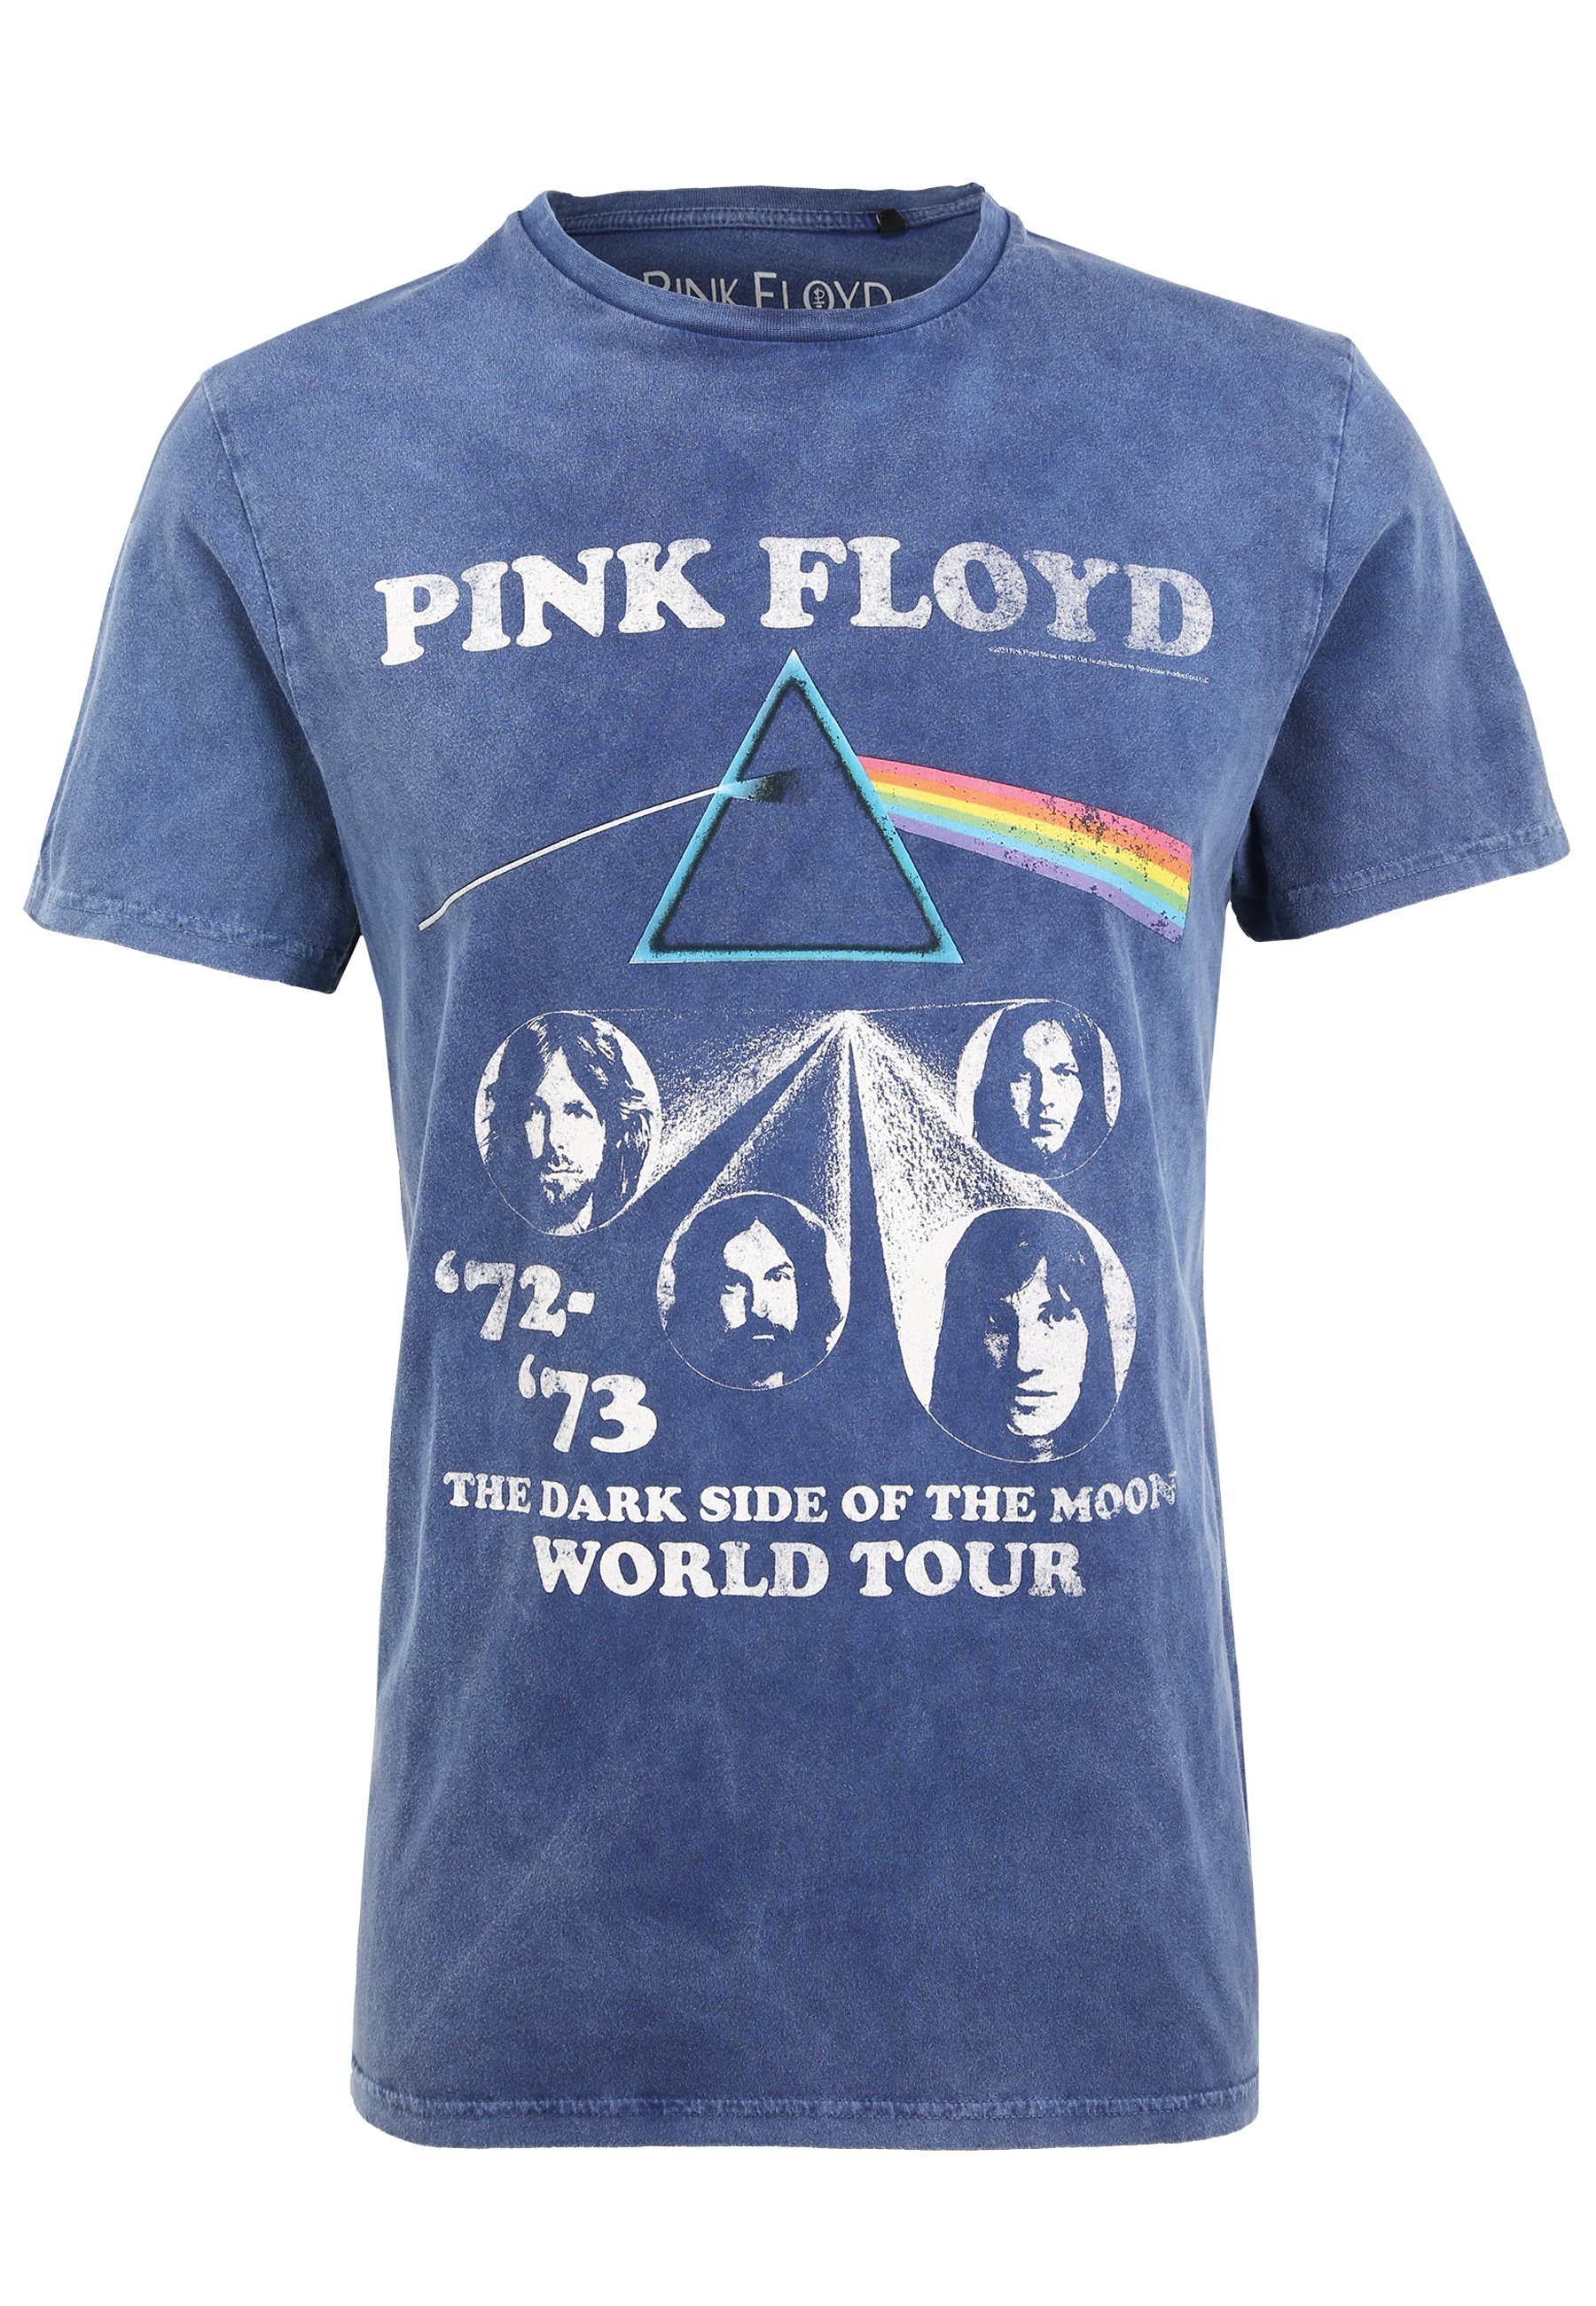 Pink Floyd Tour Blau GOTS Bio-Baumwolle Recovered World zertifizierte T-Shirt